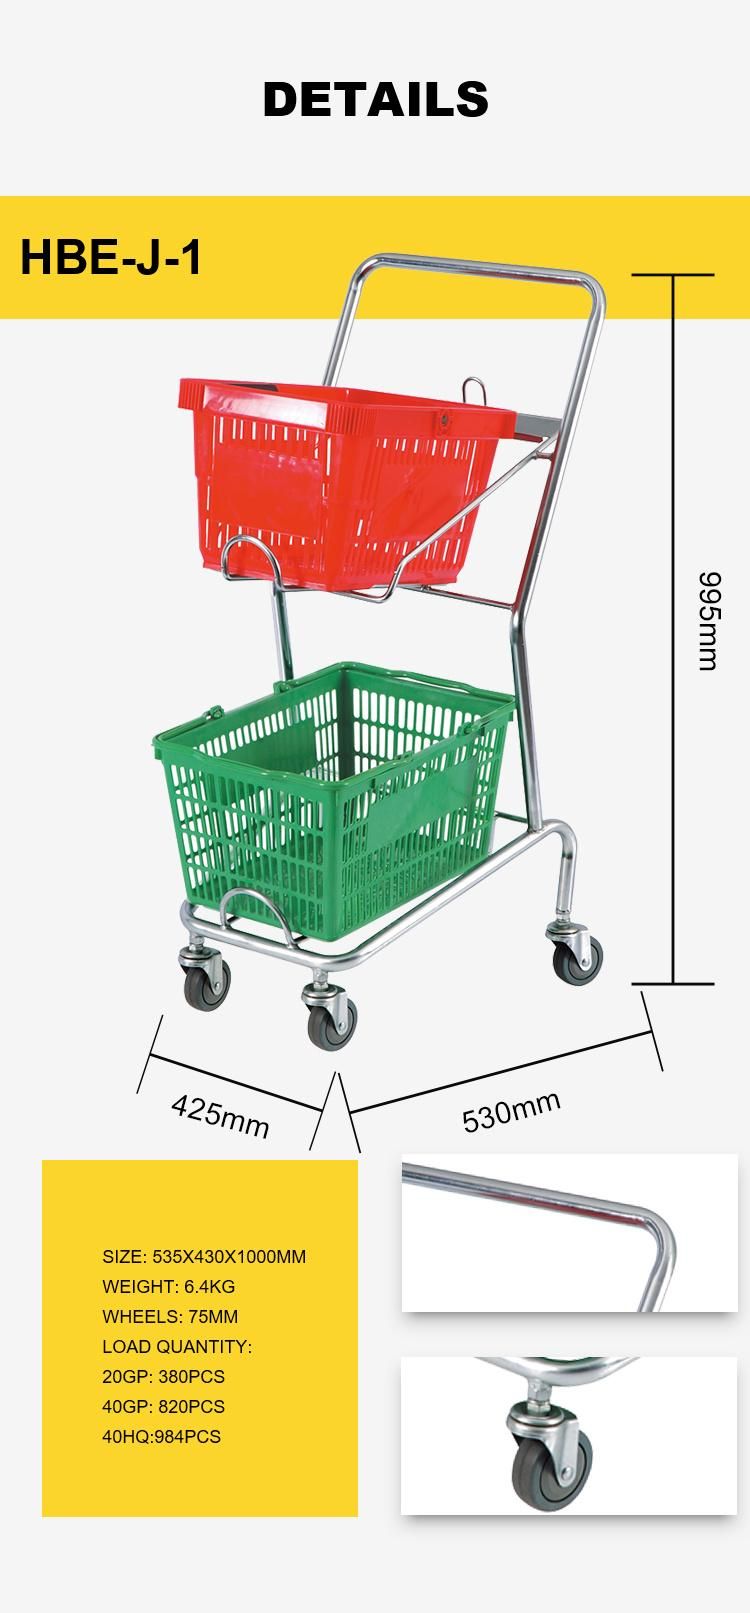 Metal Two Tiers Shopping Cart Baskets Shopping Trolley